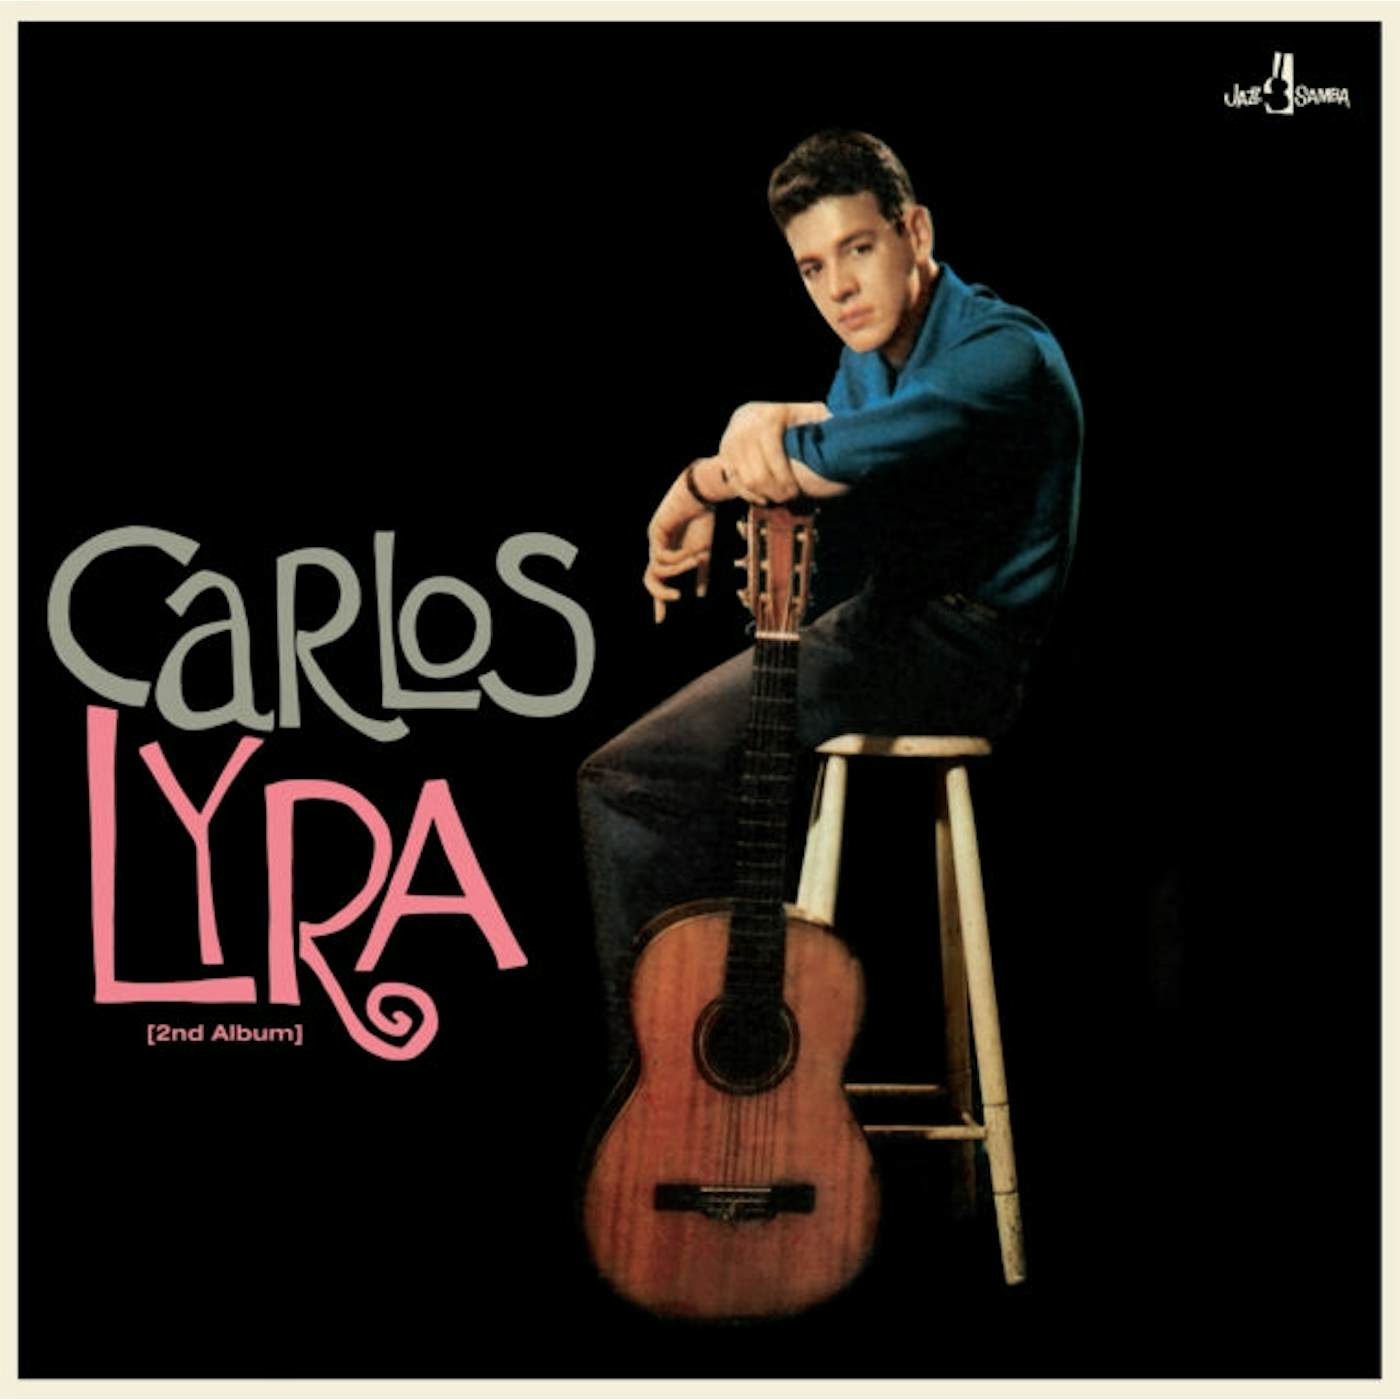 Carlos Lyra LP - 2Nd Album (Limited Edition) (Vinyl)